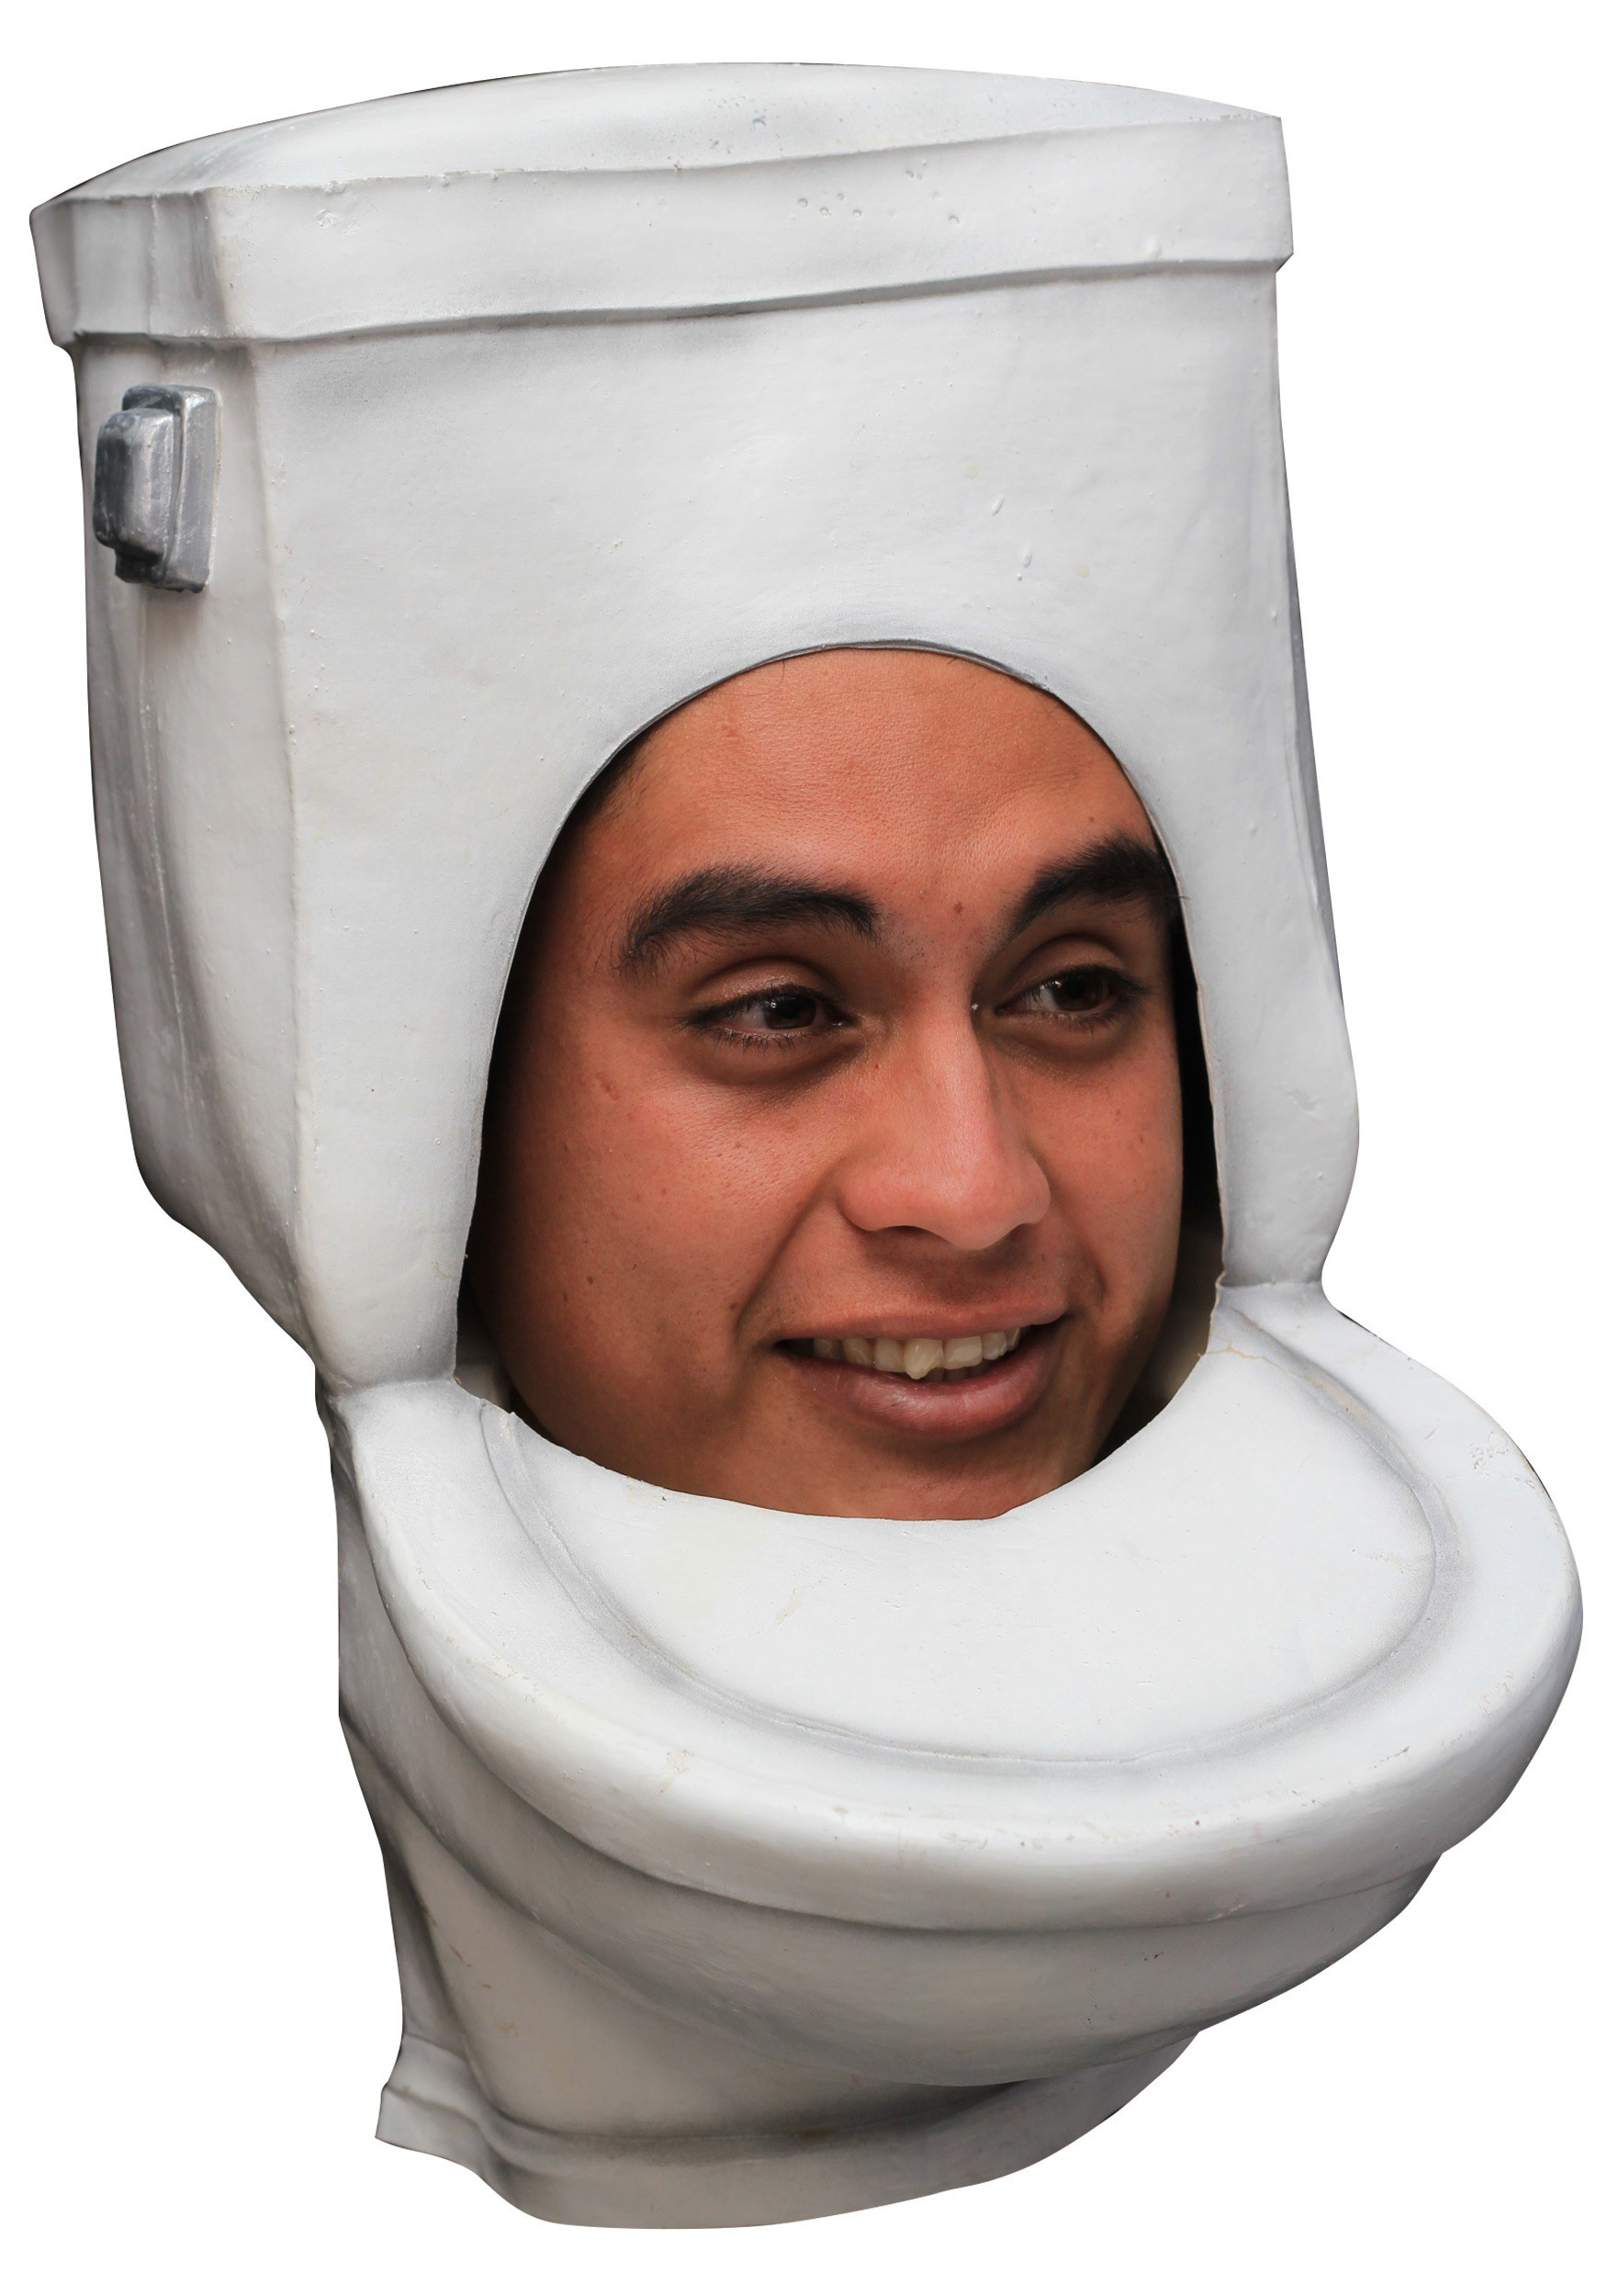 Toilet Costume Halloween
 The Toilet Adult Mask